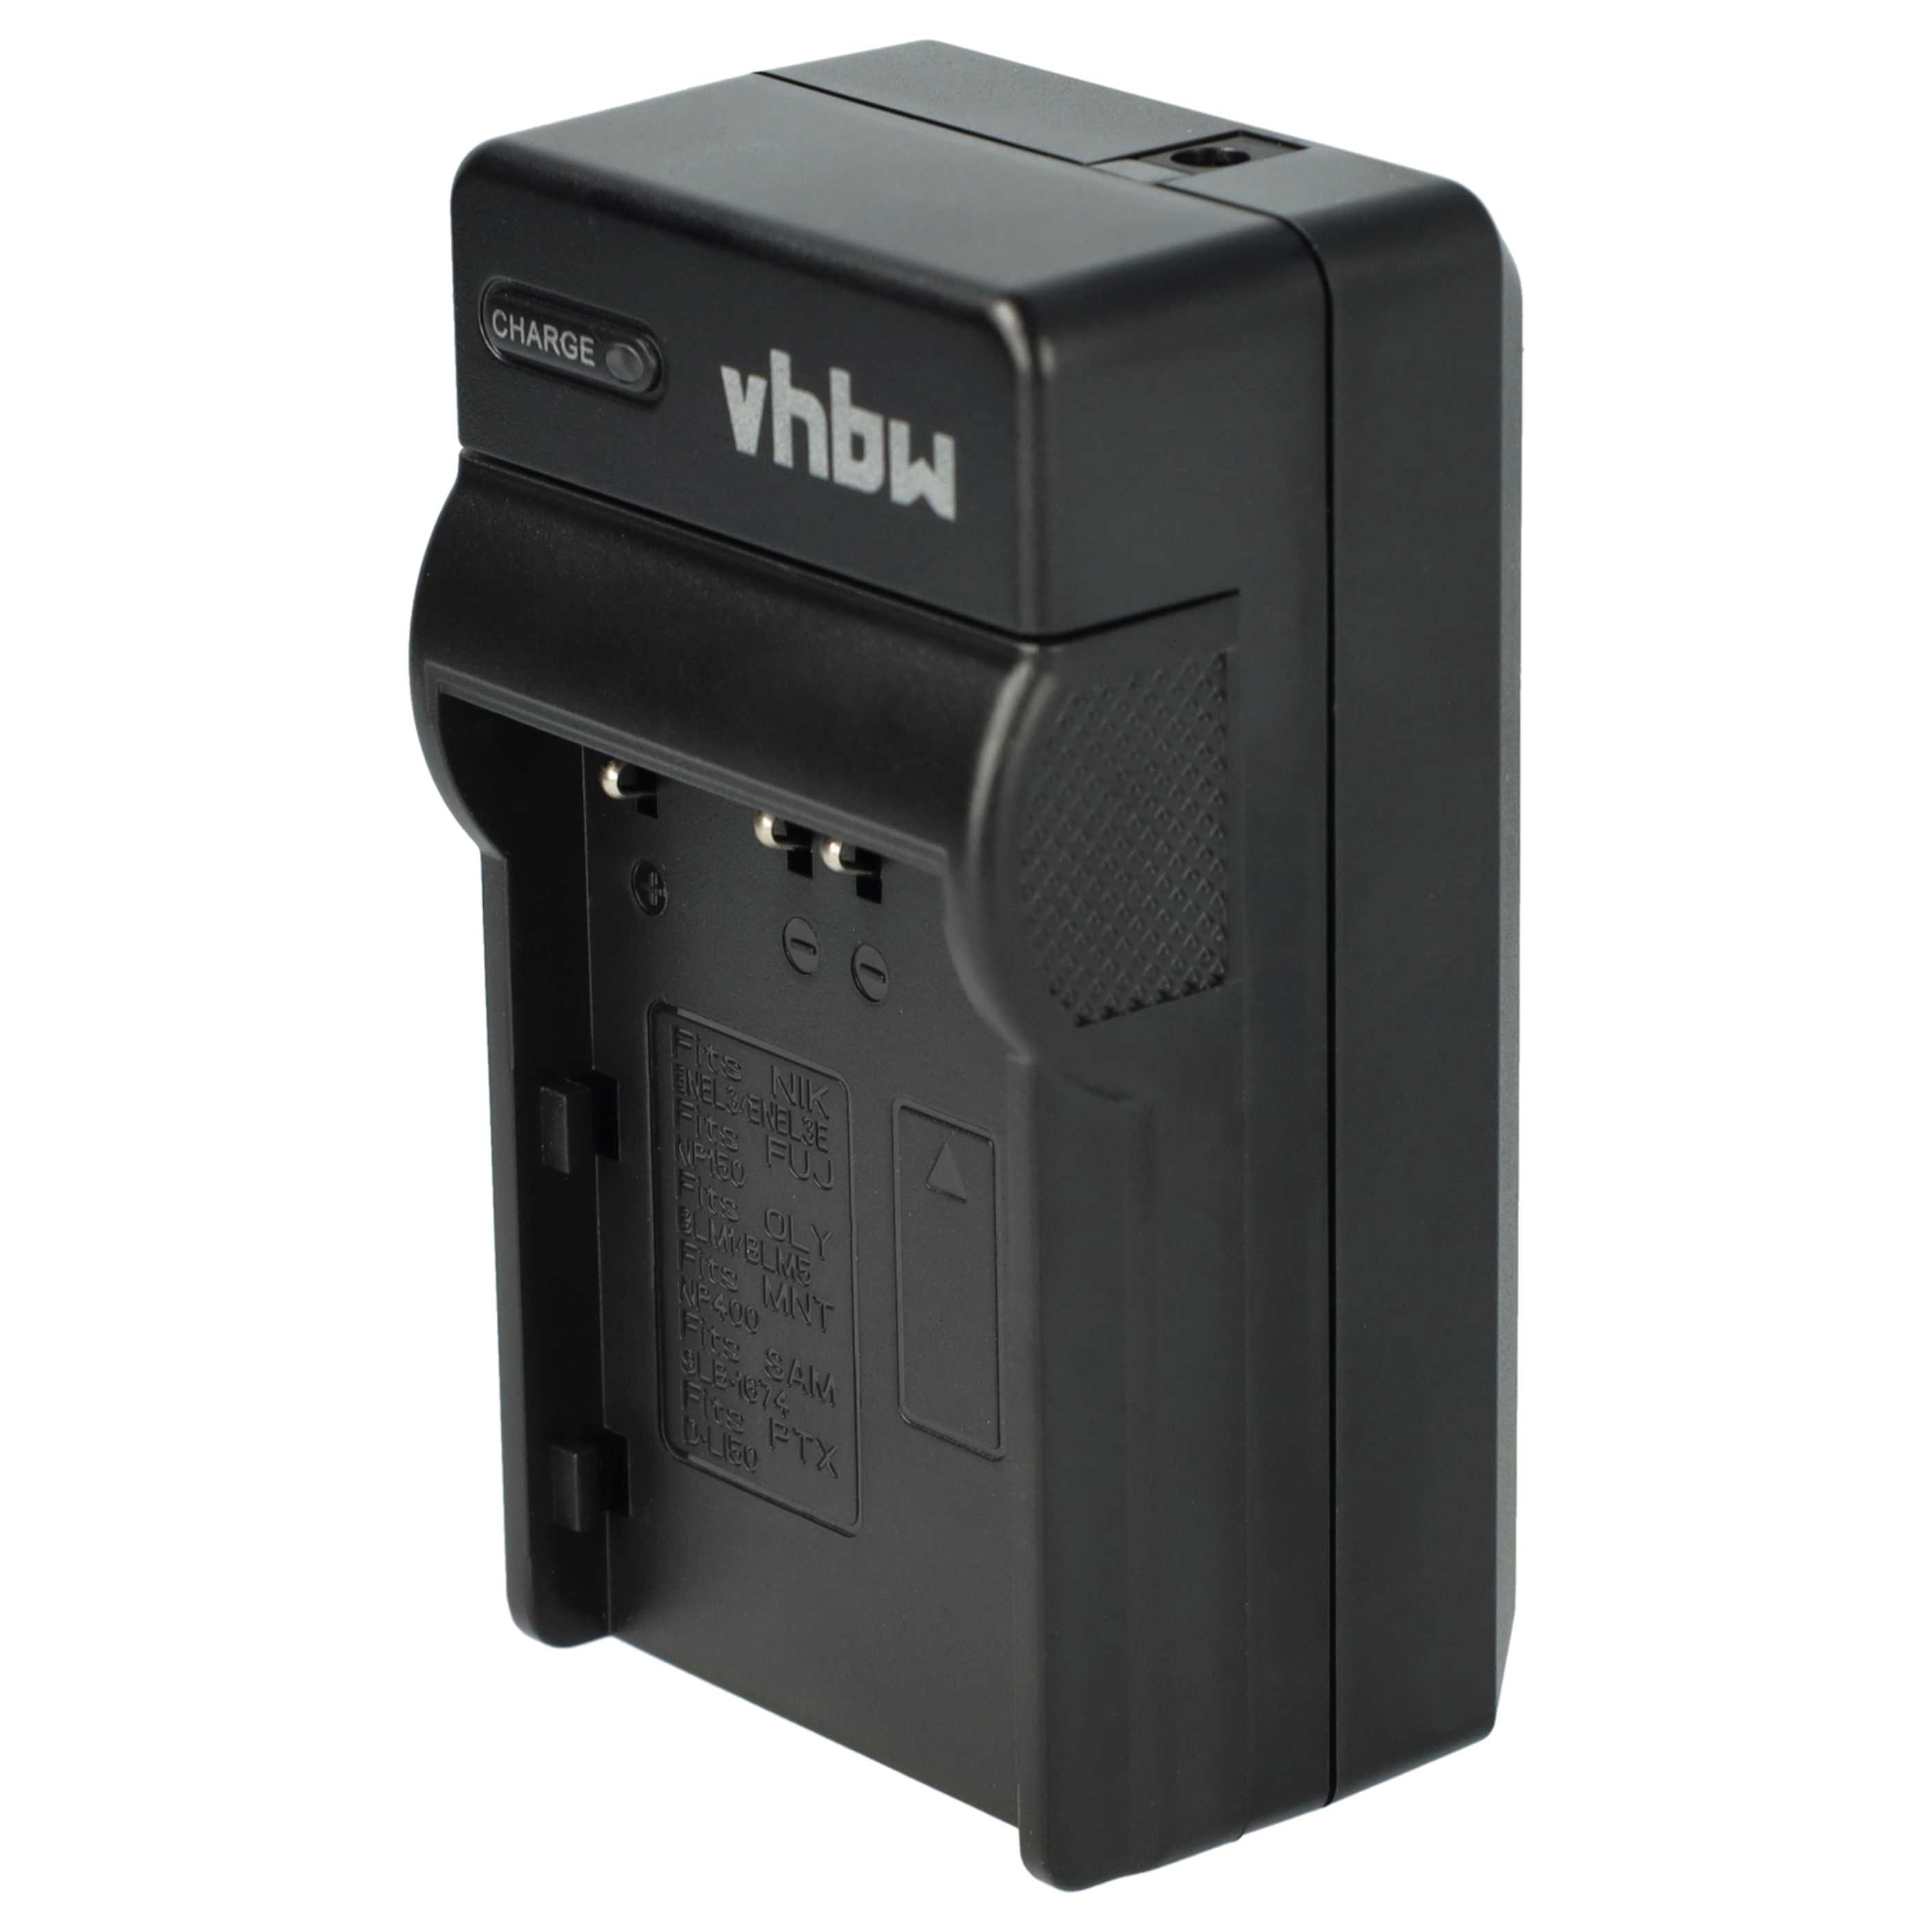 Akku Ladegerät passend für FinePix S5 Pro Kamera u.a. - 0,6 A, 8,4 V